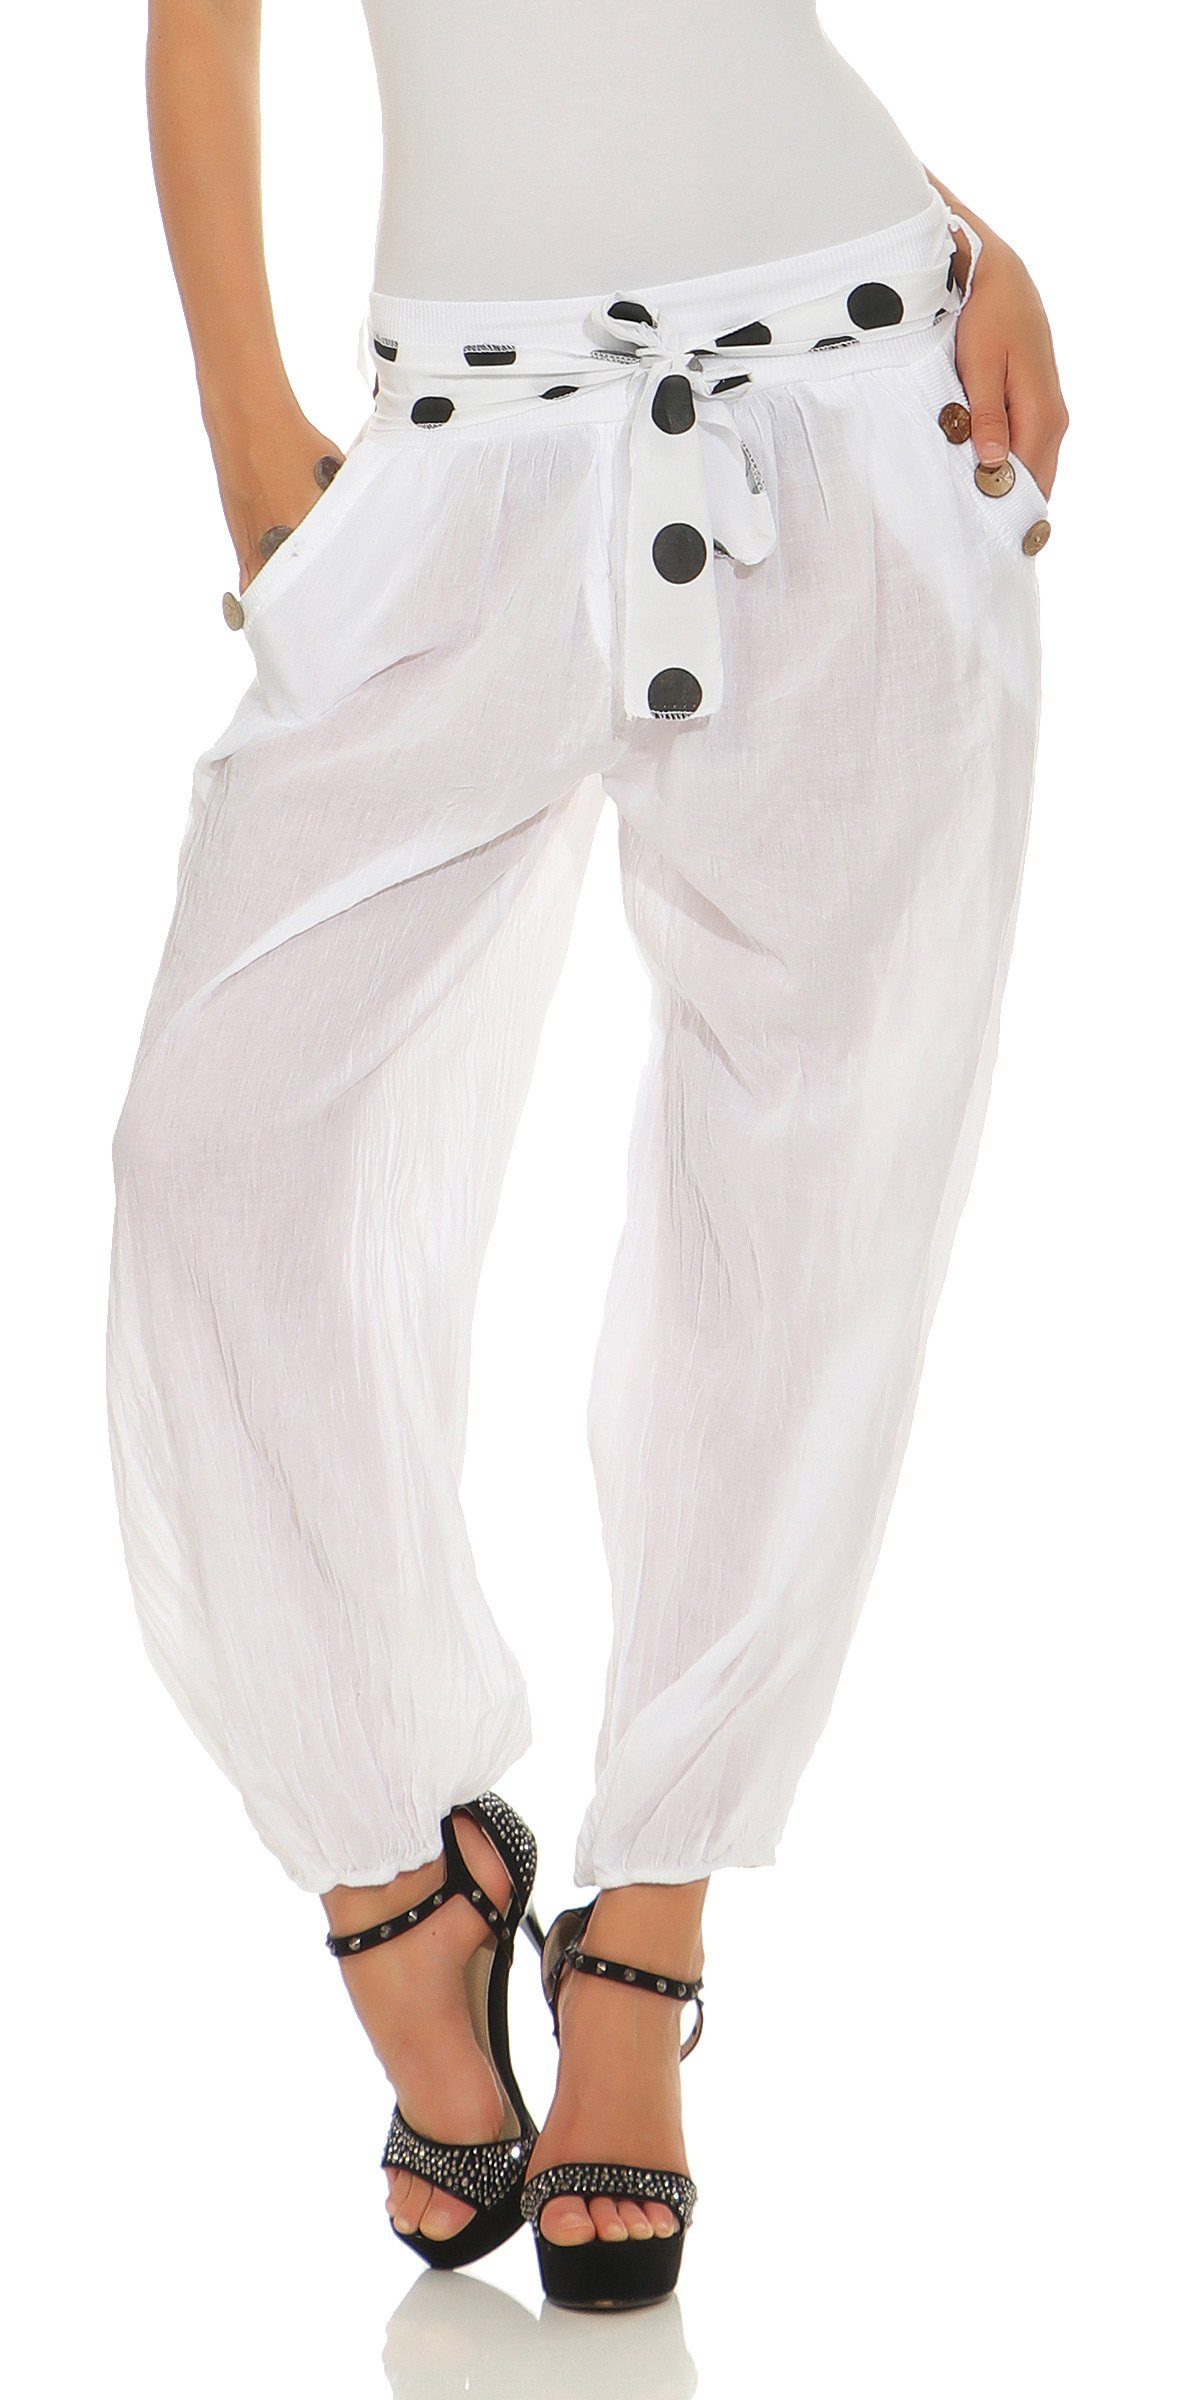 Mississhop Haremshose Leichte Baumwollhose einfarbige Hose Sommerhose Aladinhose M. 270 in Unifarbe Weiß